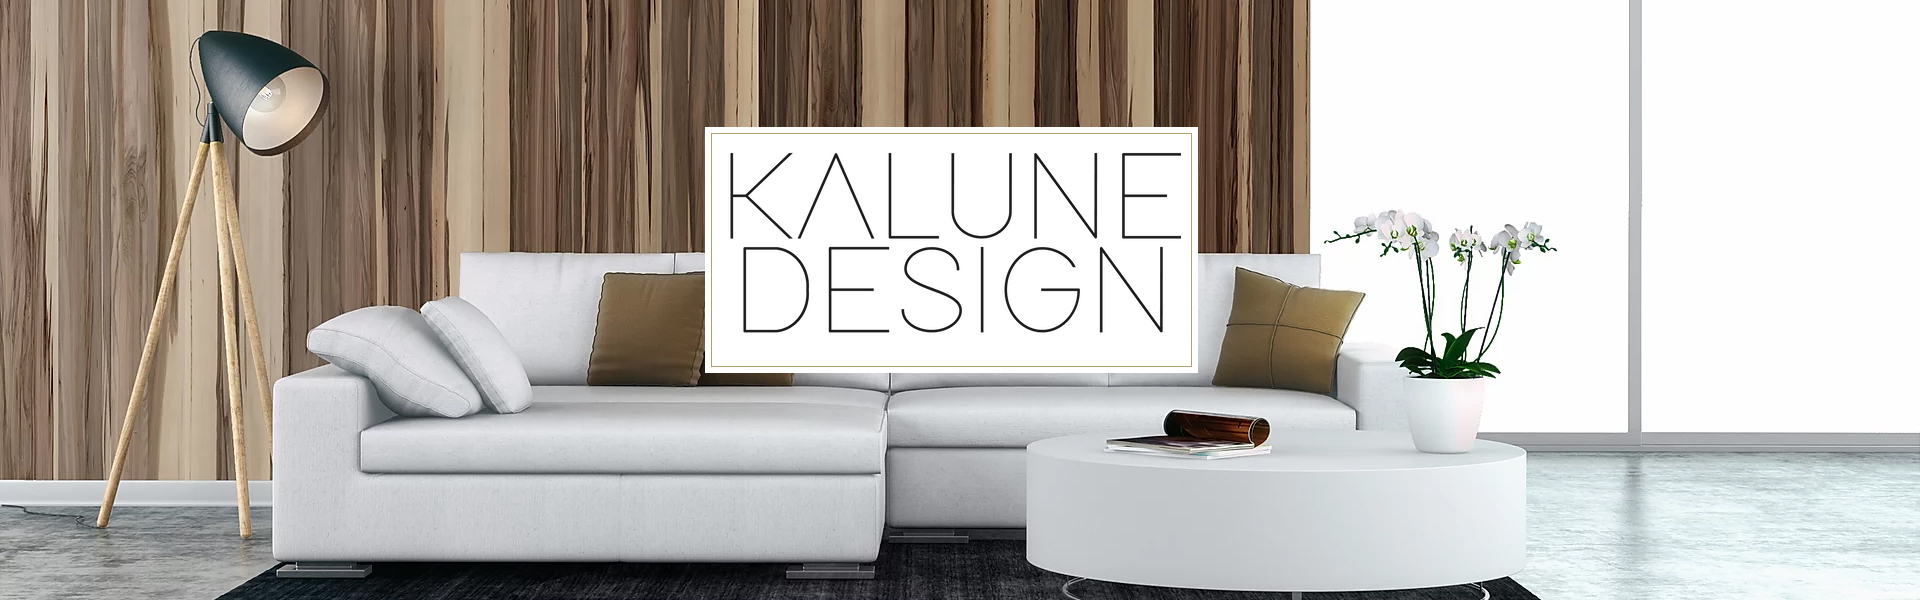 Riidenagi Kalune Design 893, valge/must Kalune Design